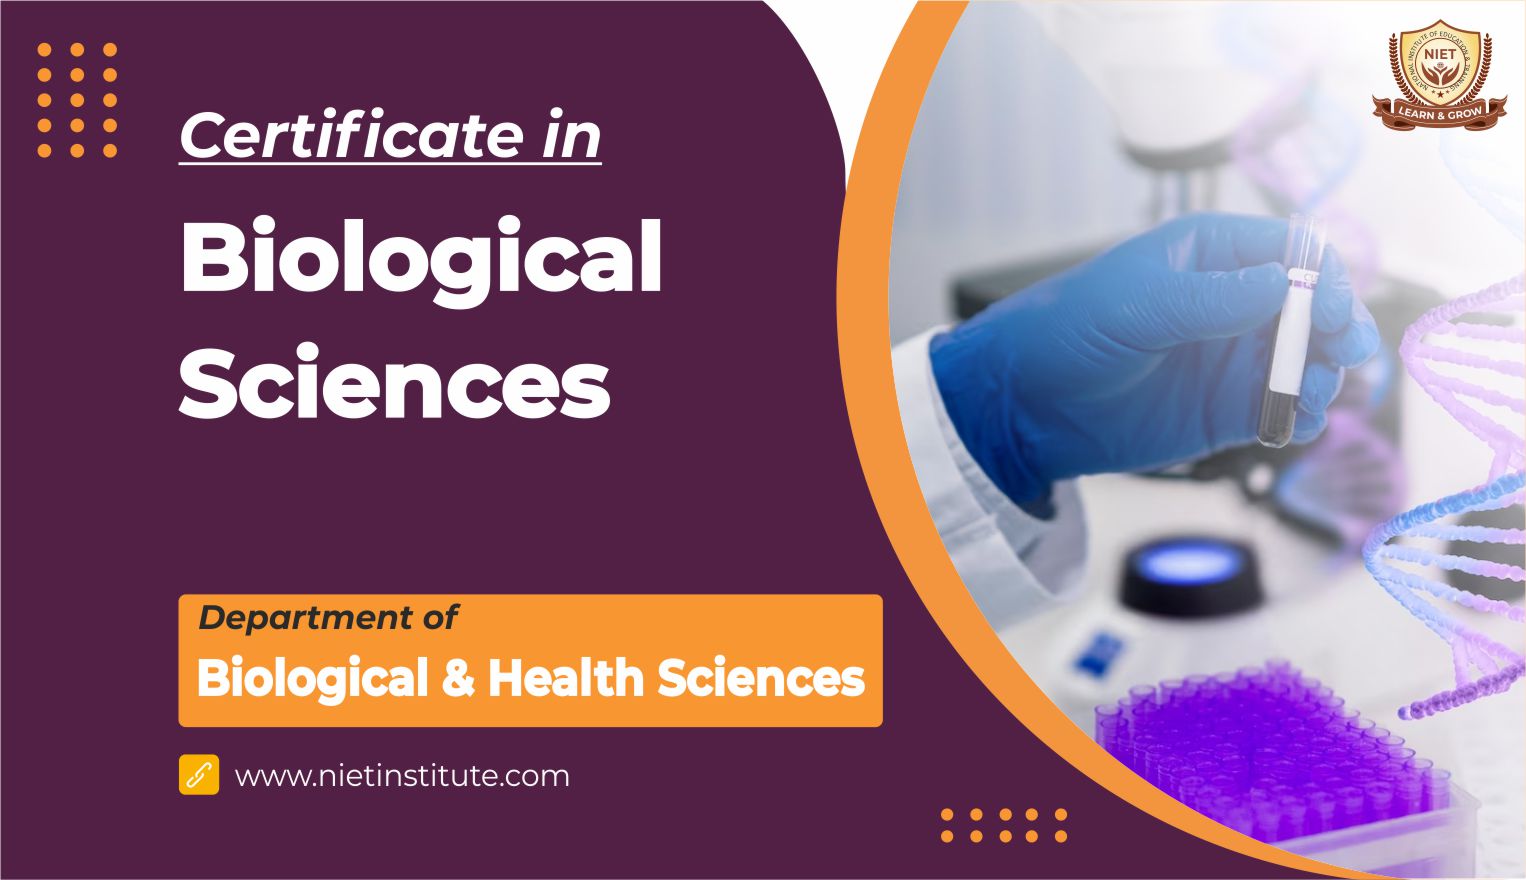 Certificate in Biological Sciences